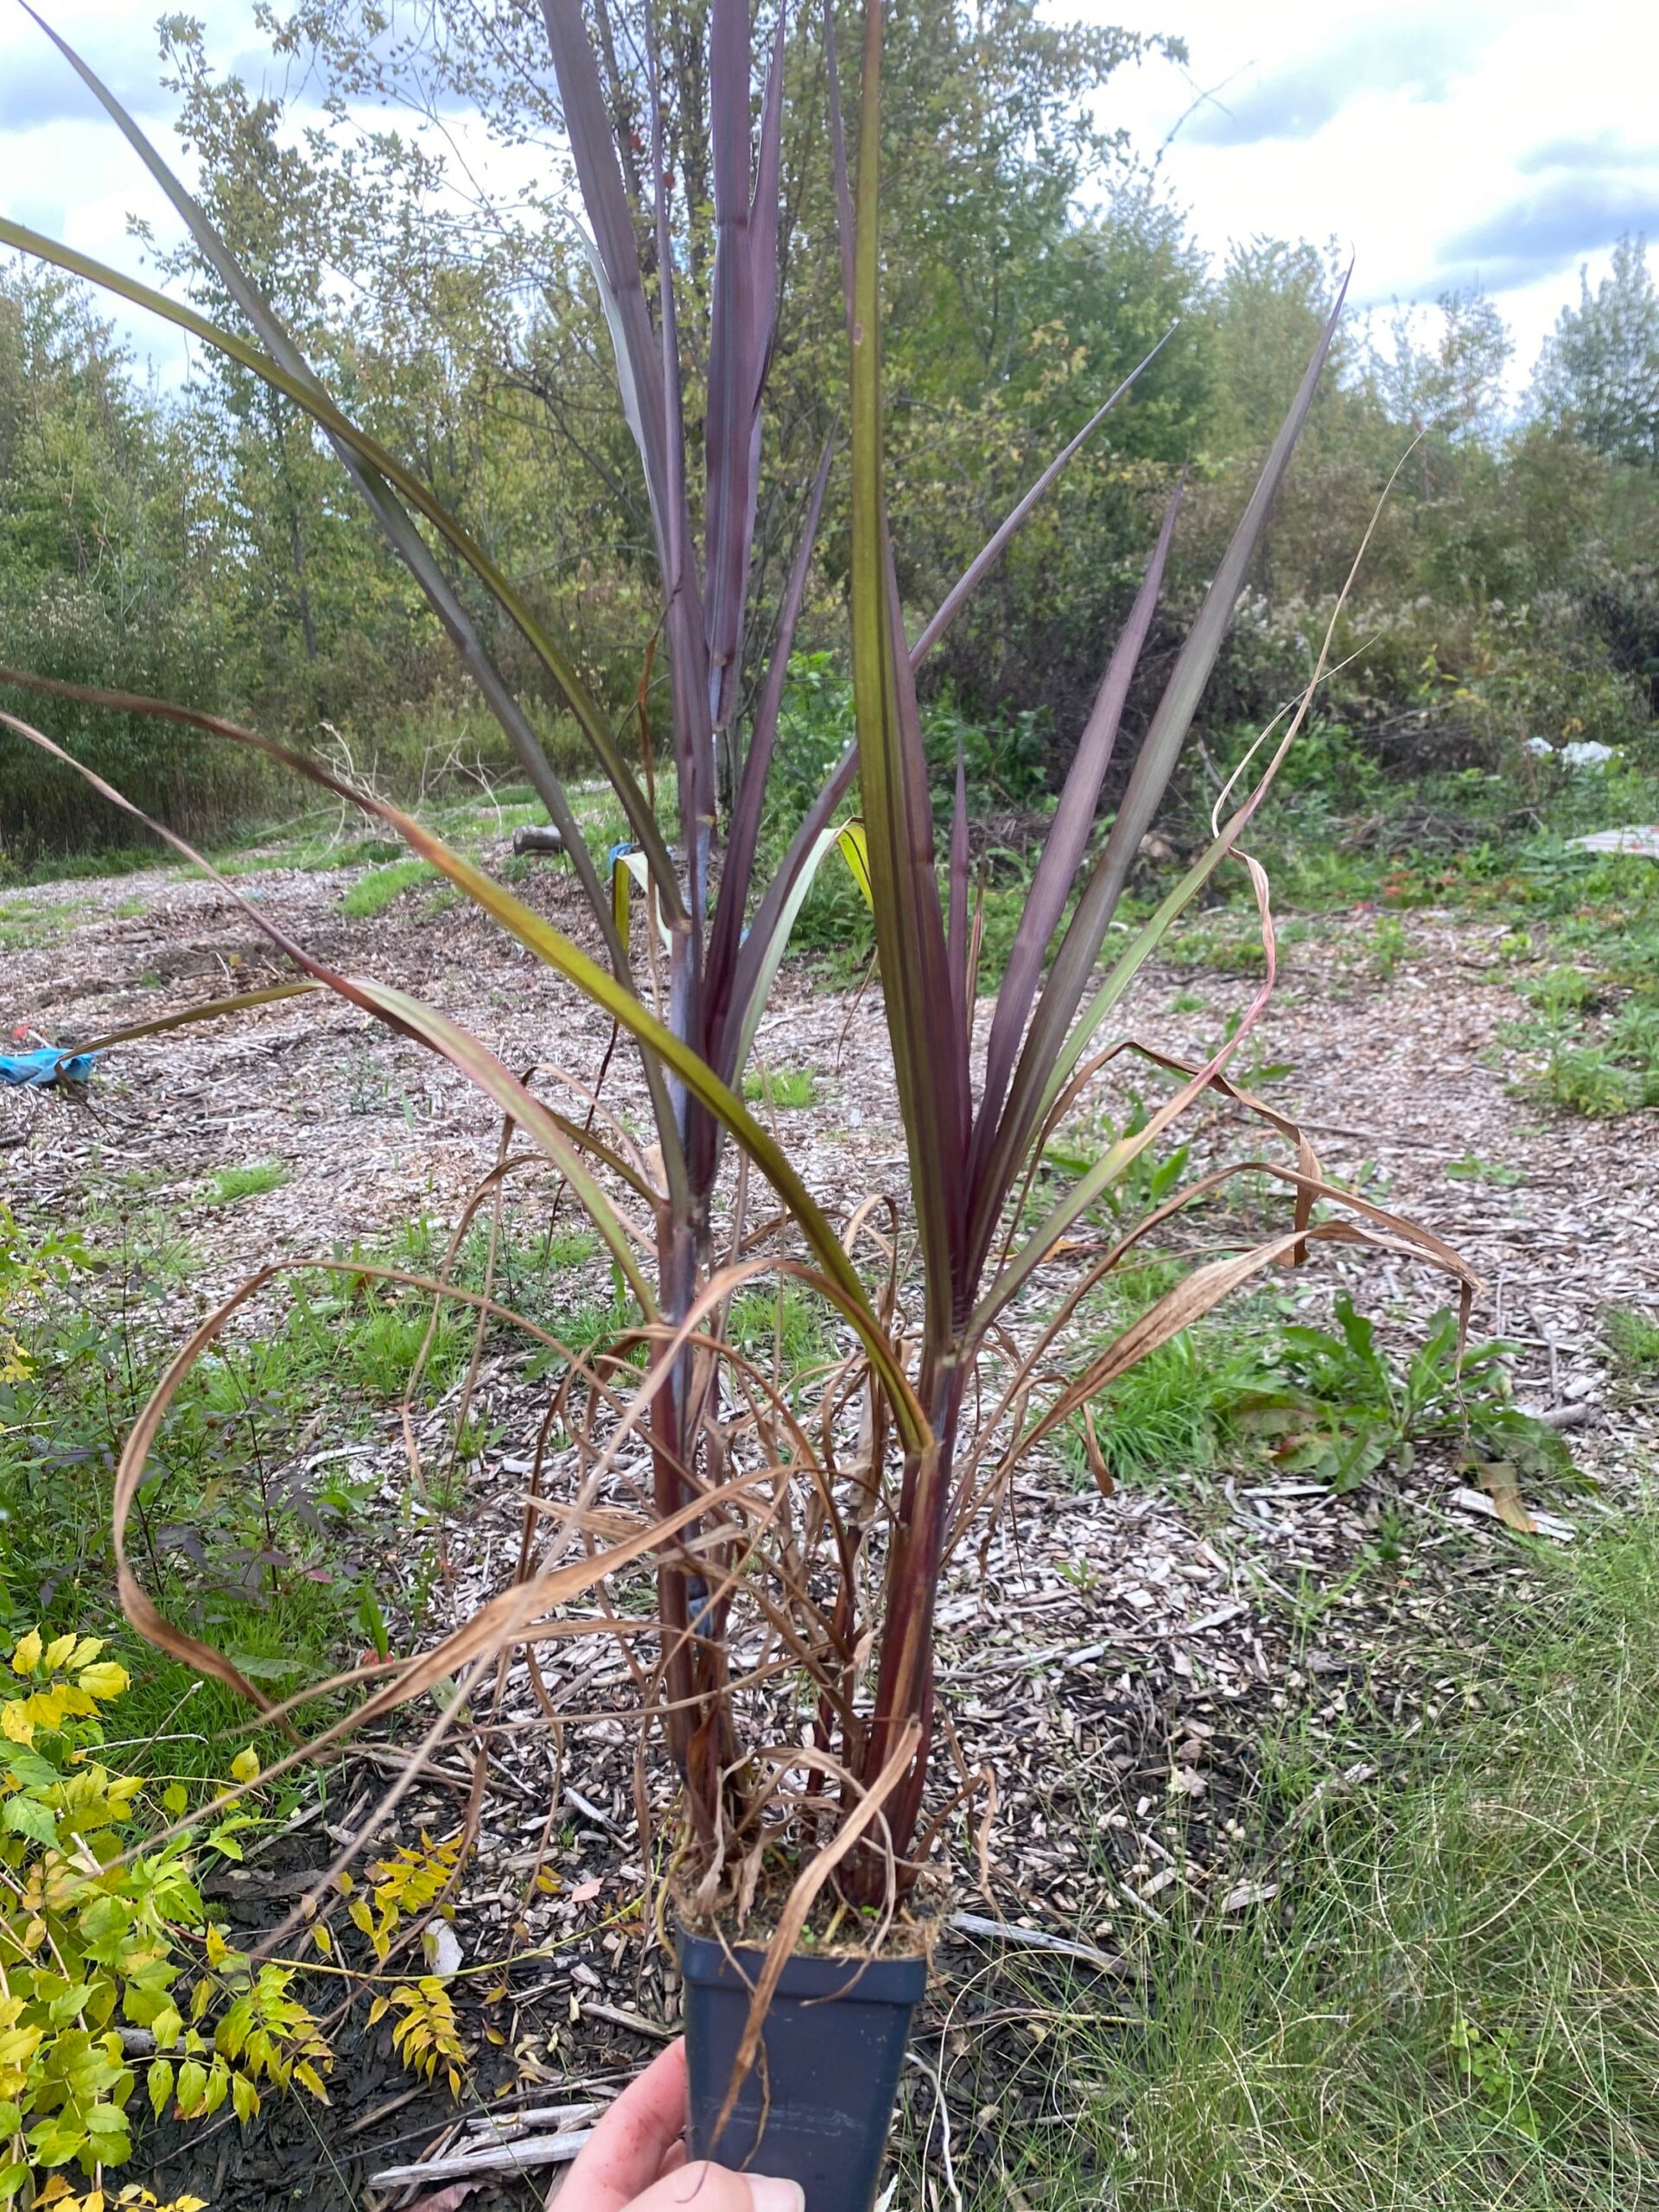 FIRST KNIGHT Black Grass Pennisetum Perennial Ornamental 1 Live Plant Clumping